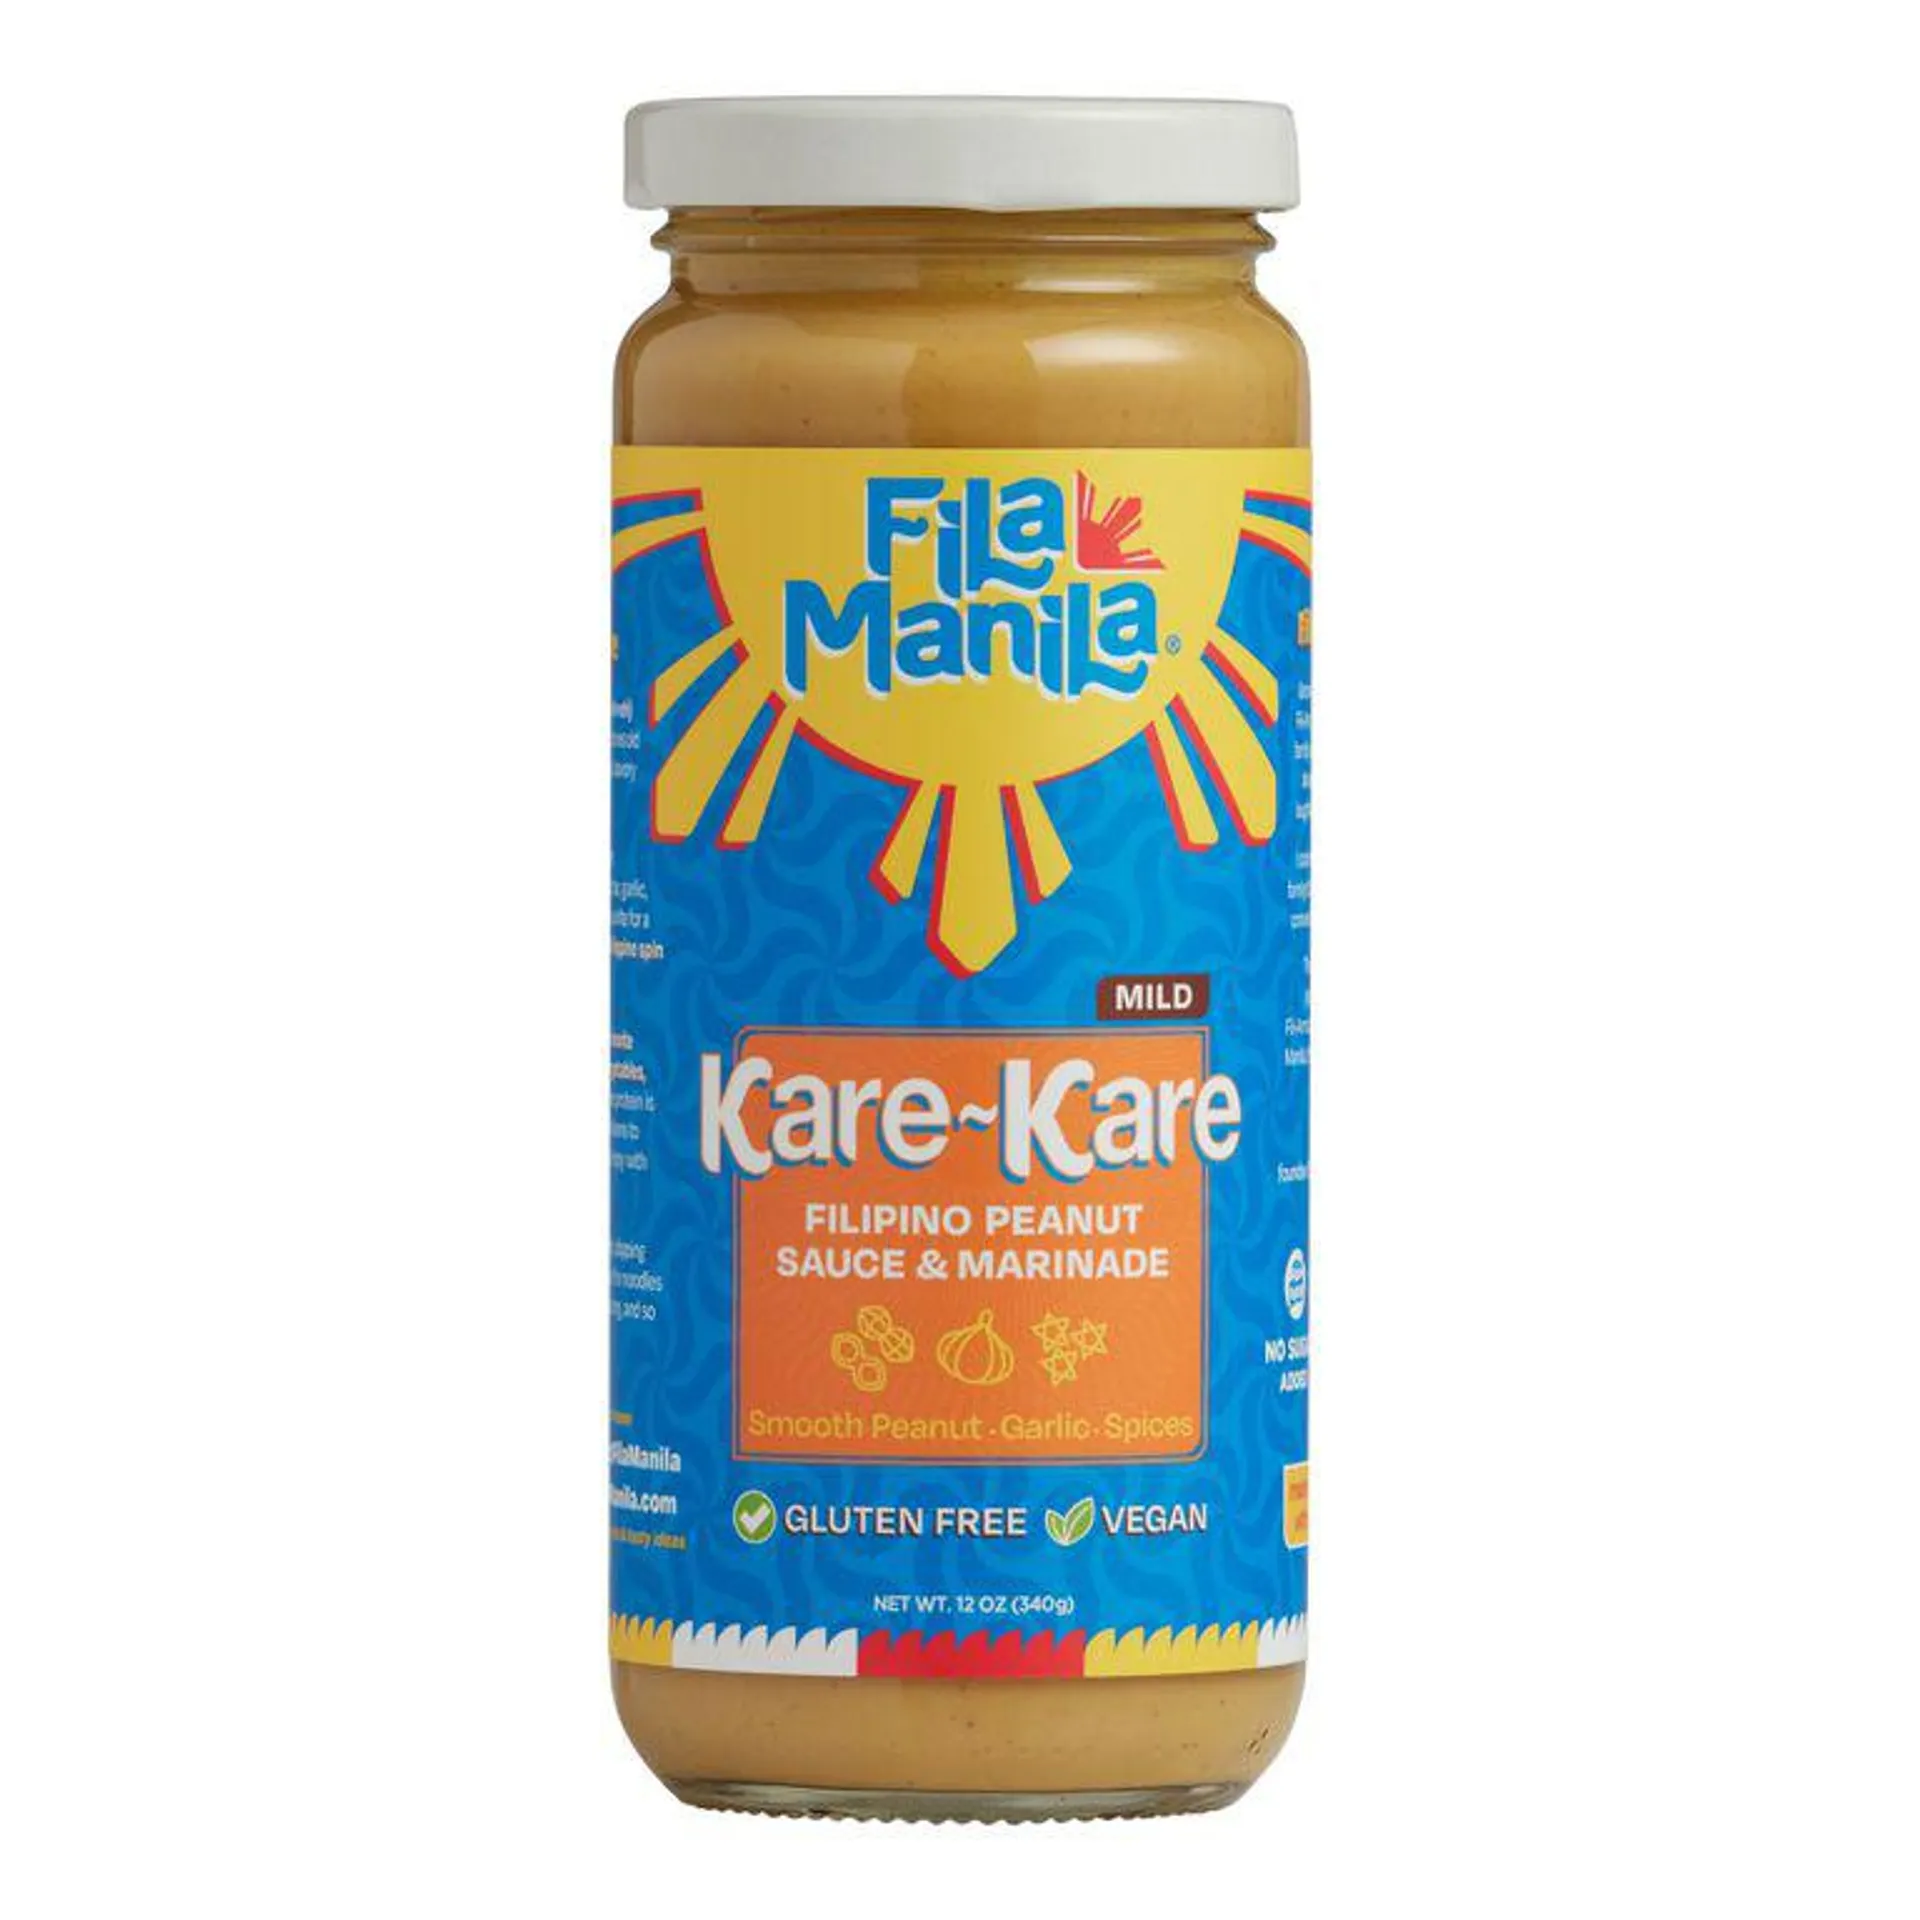 Fila Manila Kare Kare Peanut Sauce and Marinade